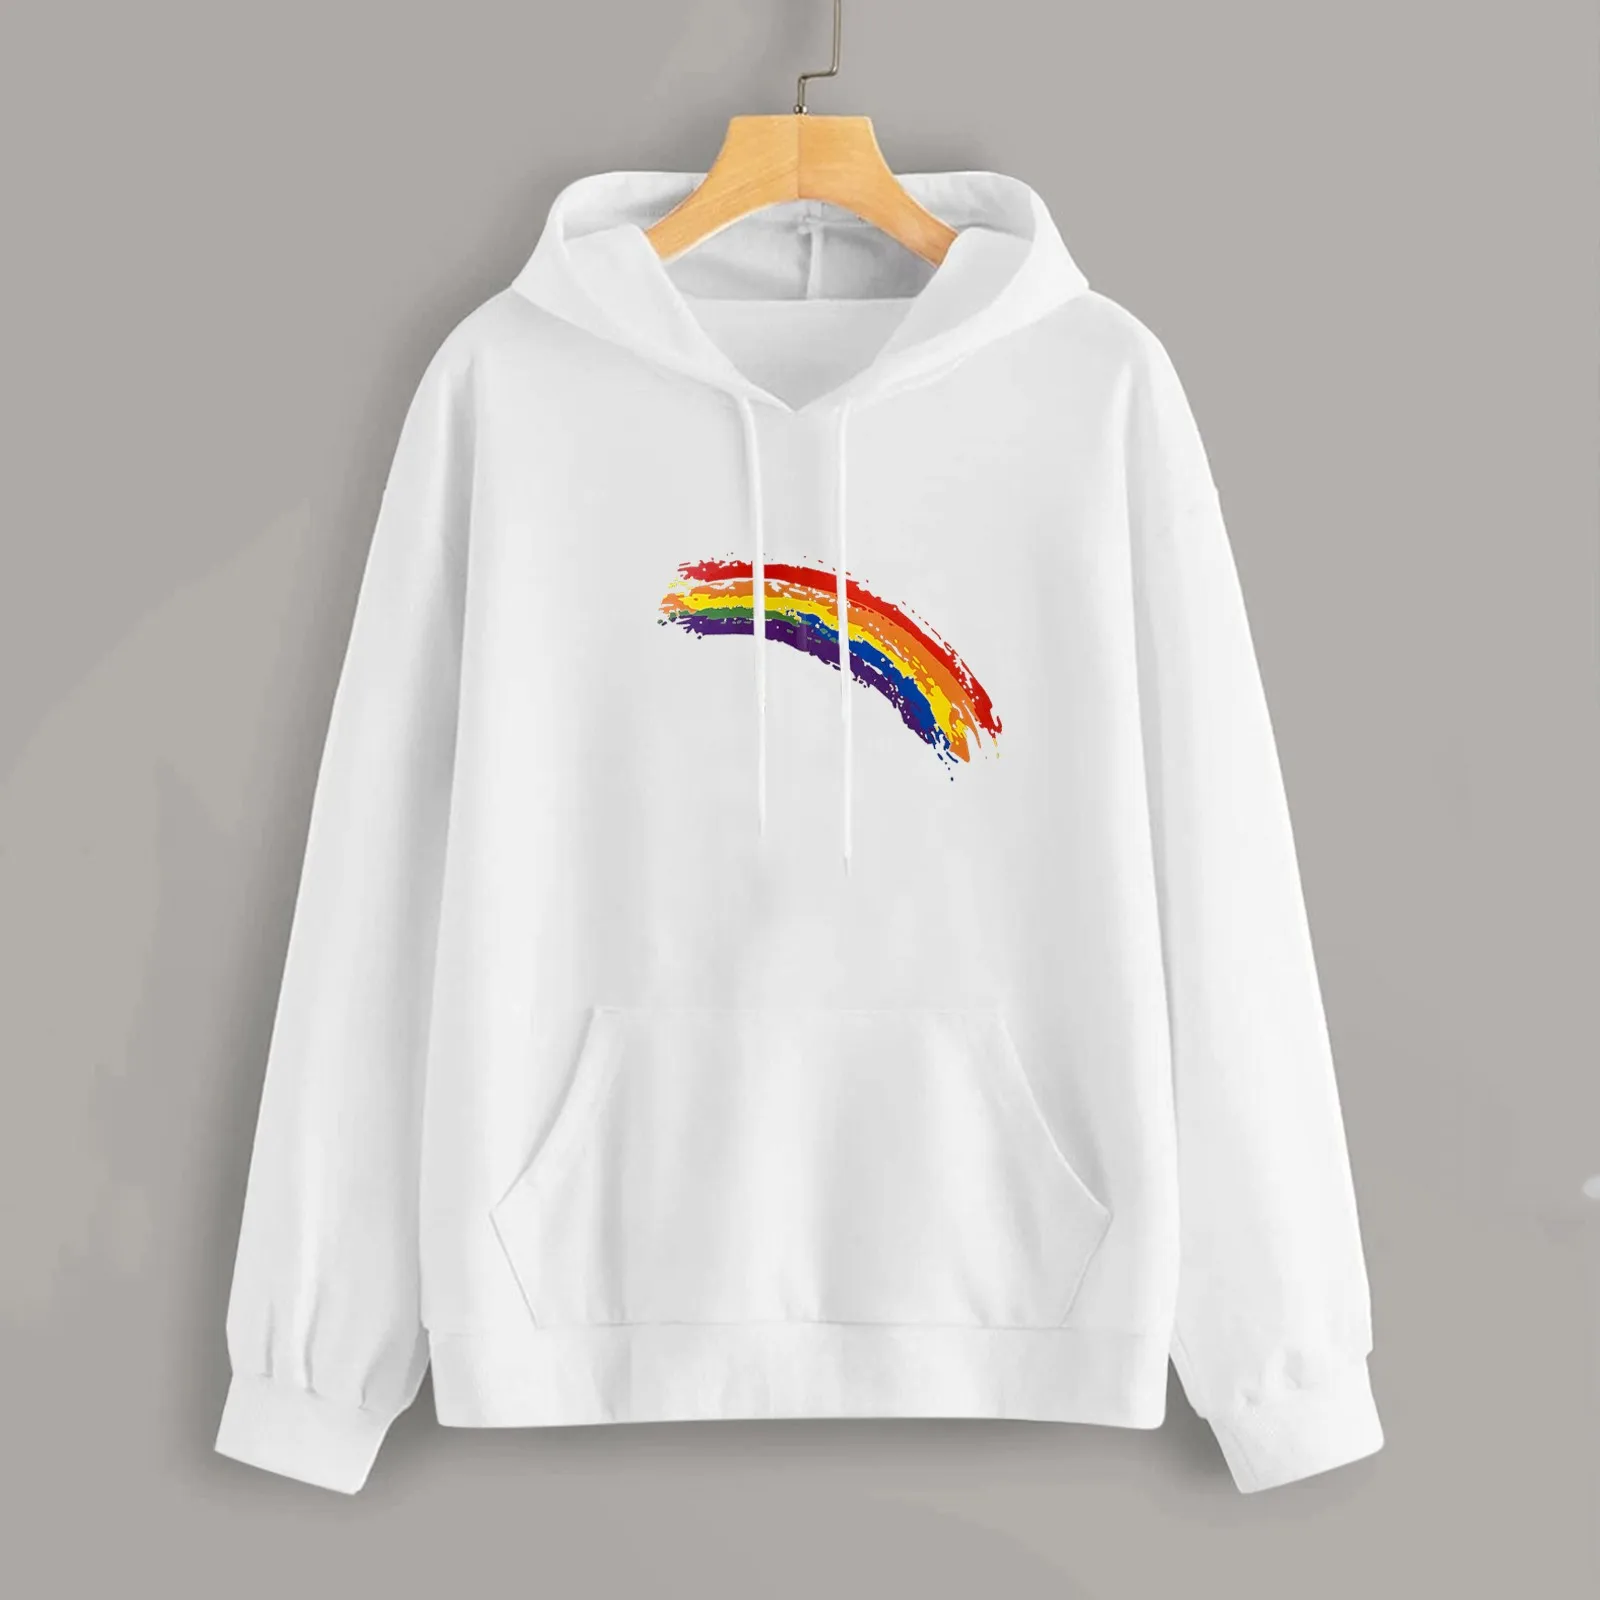 Women Rainbow Print Sweatshirt Polyester Long Sleeve Shirt Fashion Casual Blouse 